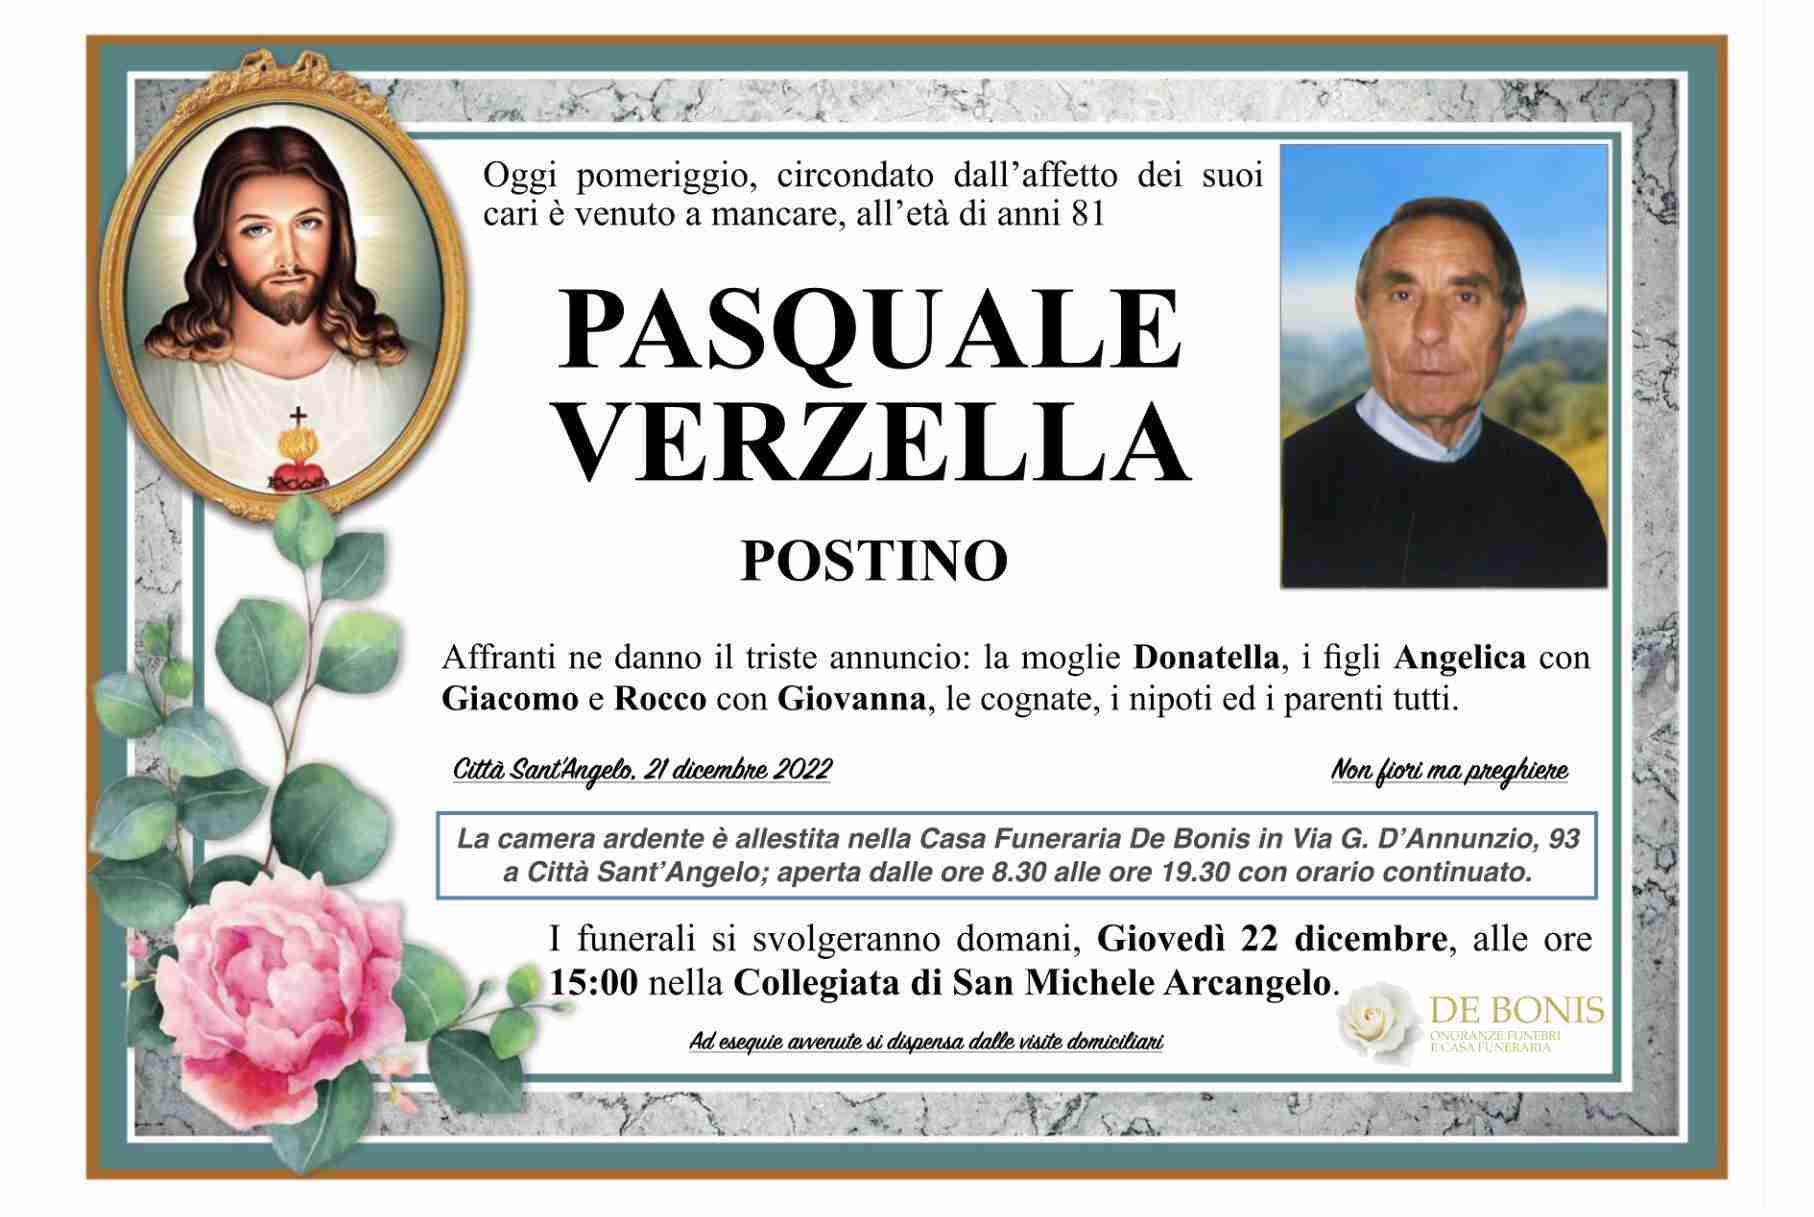 Pasquale Verzella